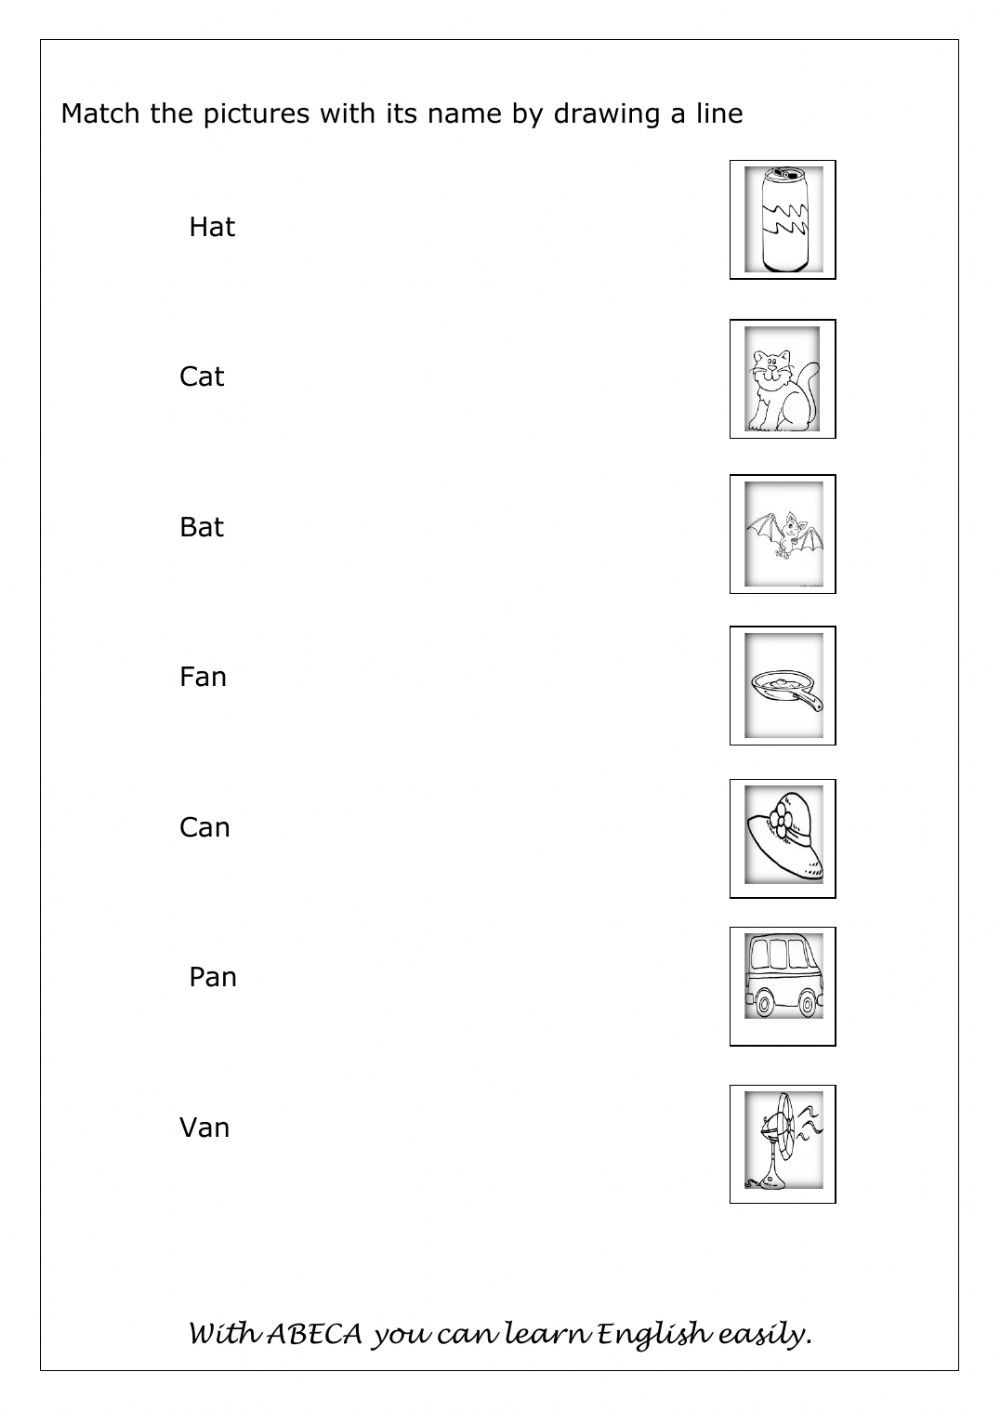 Short and Long Vowel Worksheet Long and Short Vowels Interactive Worksheet